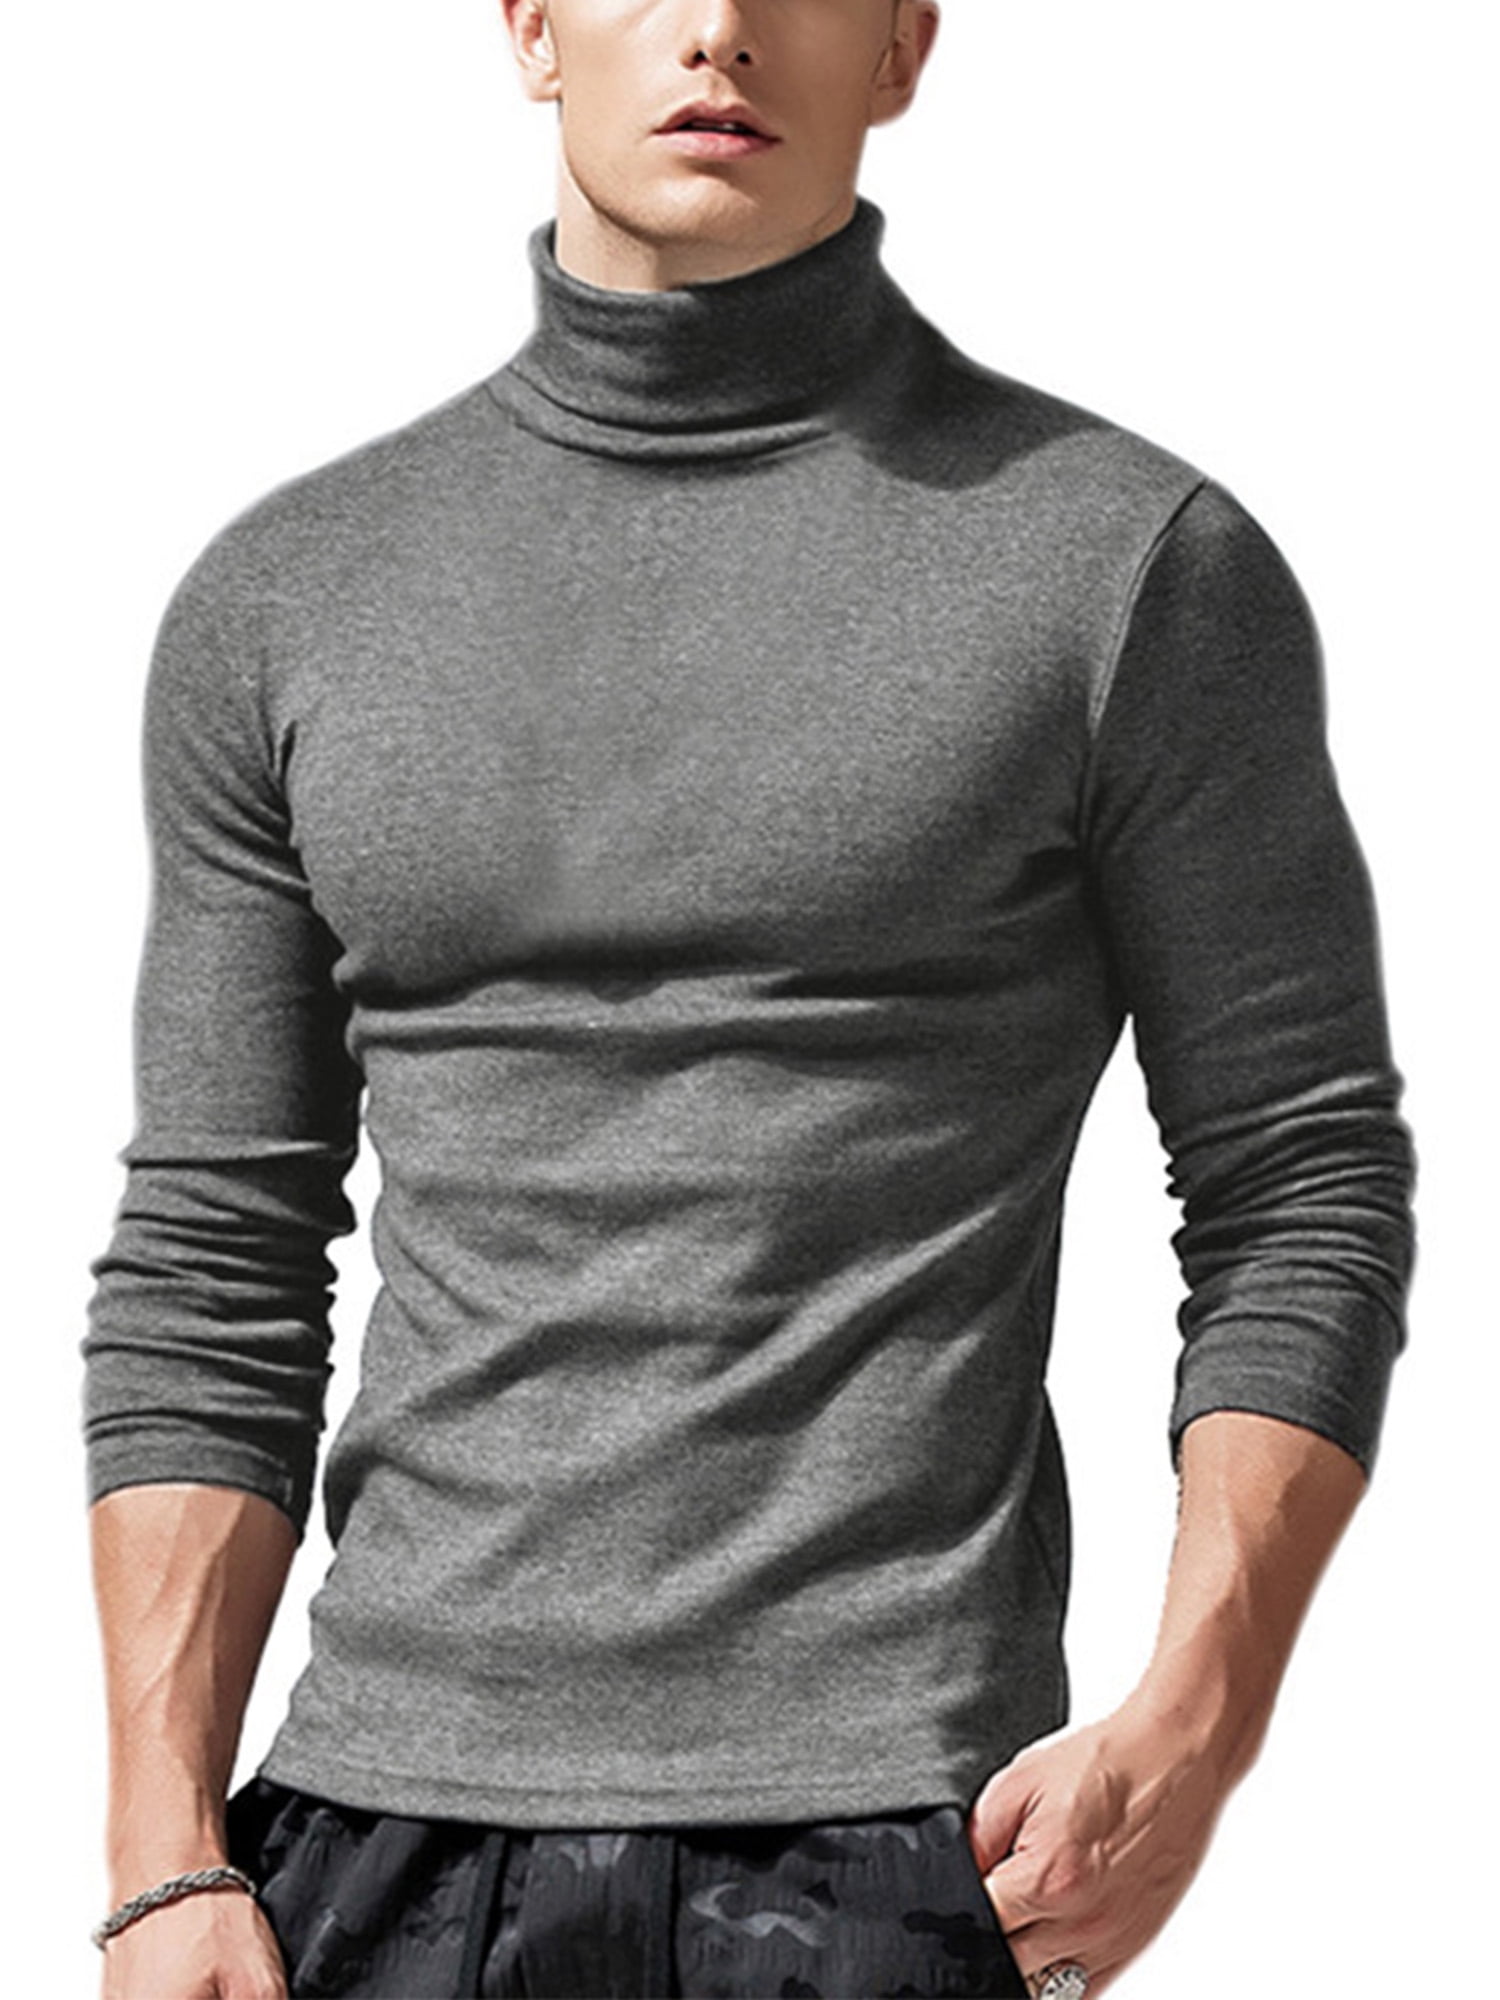 Long Sleeve Shirt for Men Winter Turtleneck Basic Top Thermal Mock ...